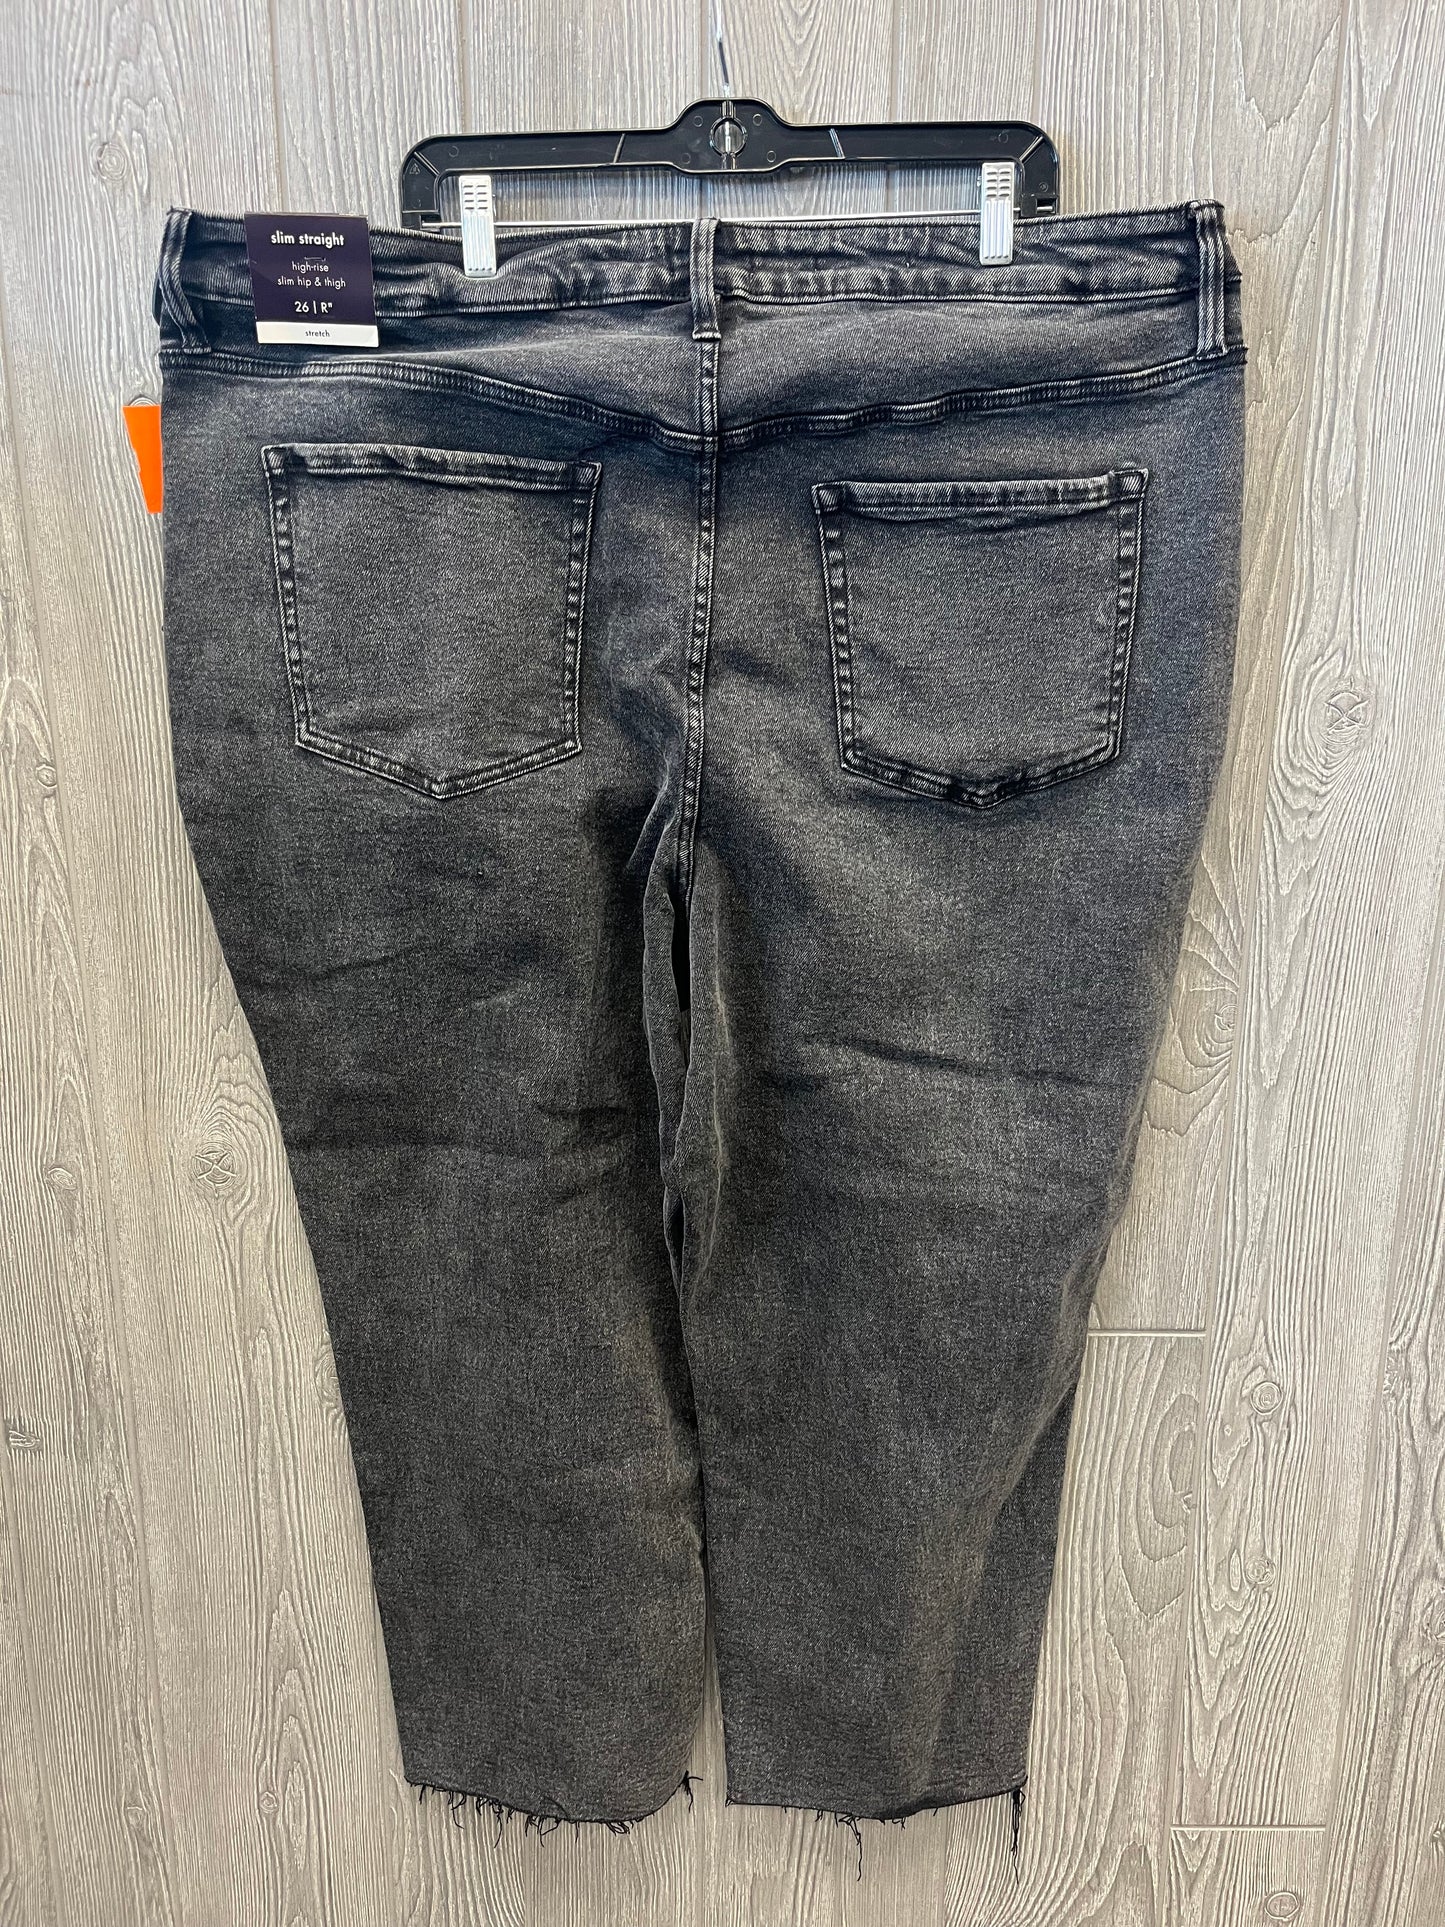 Jeans Straight By Ava & Viv  Size: 26